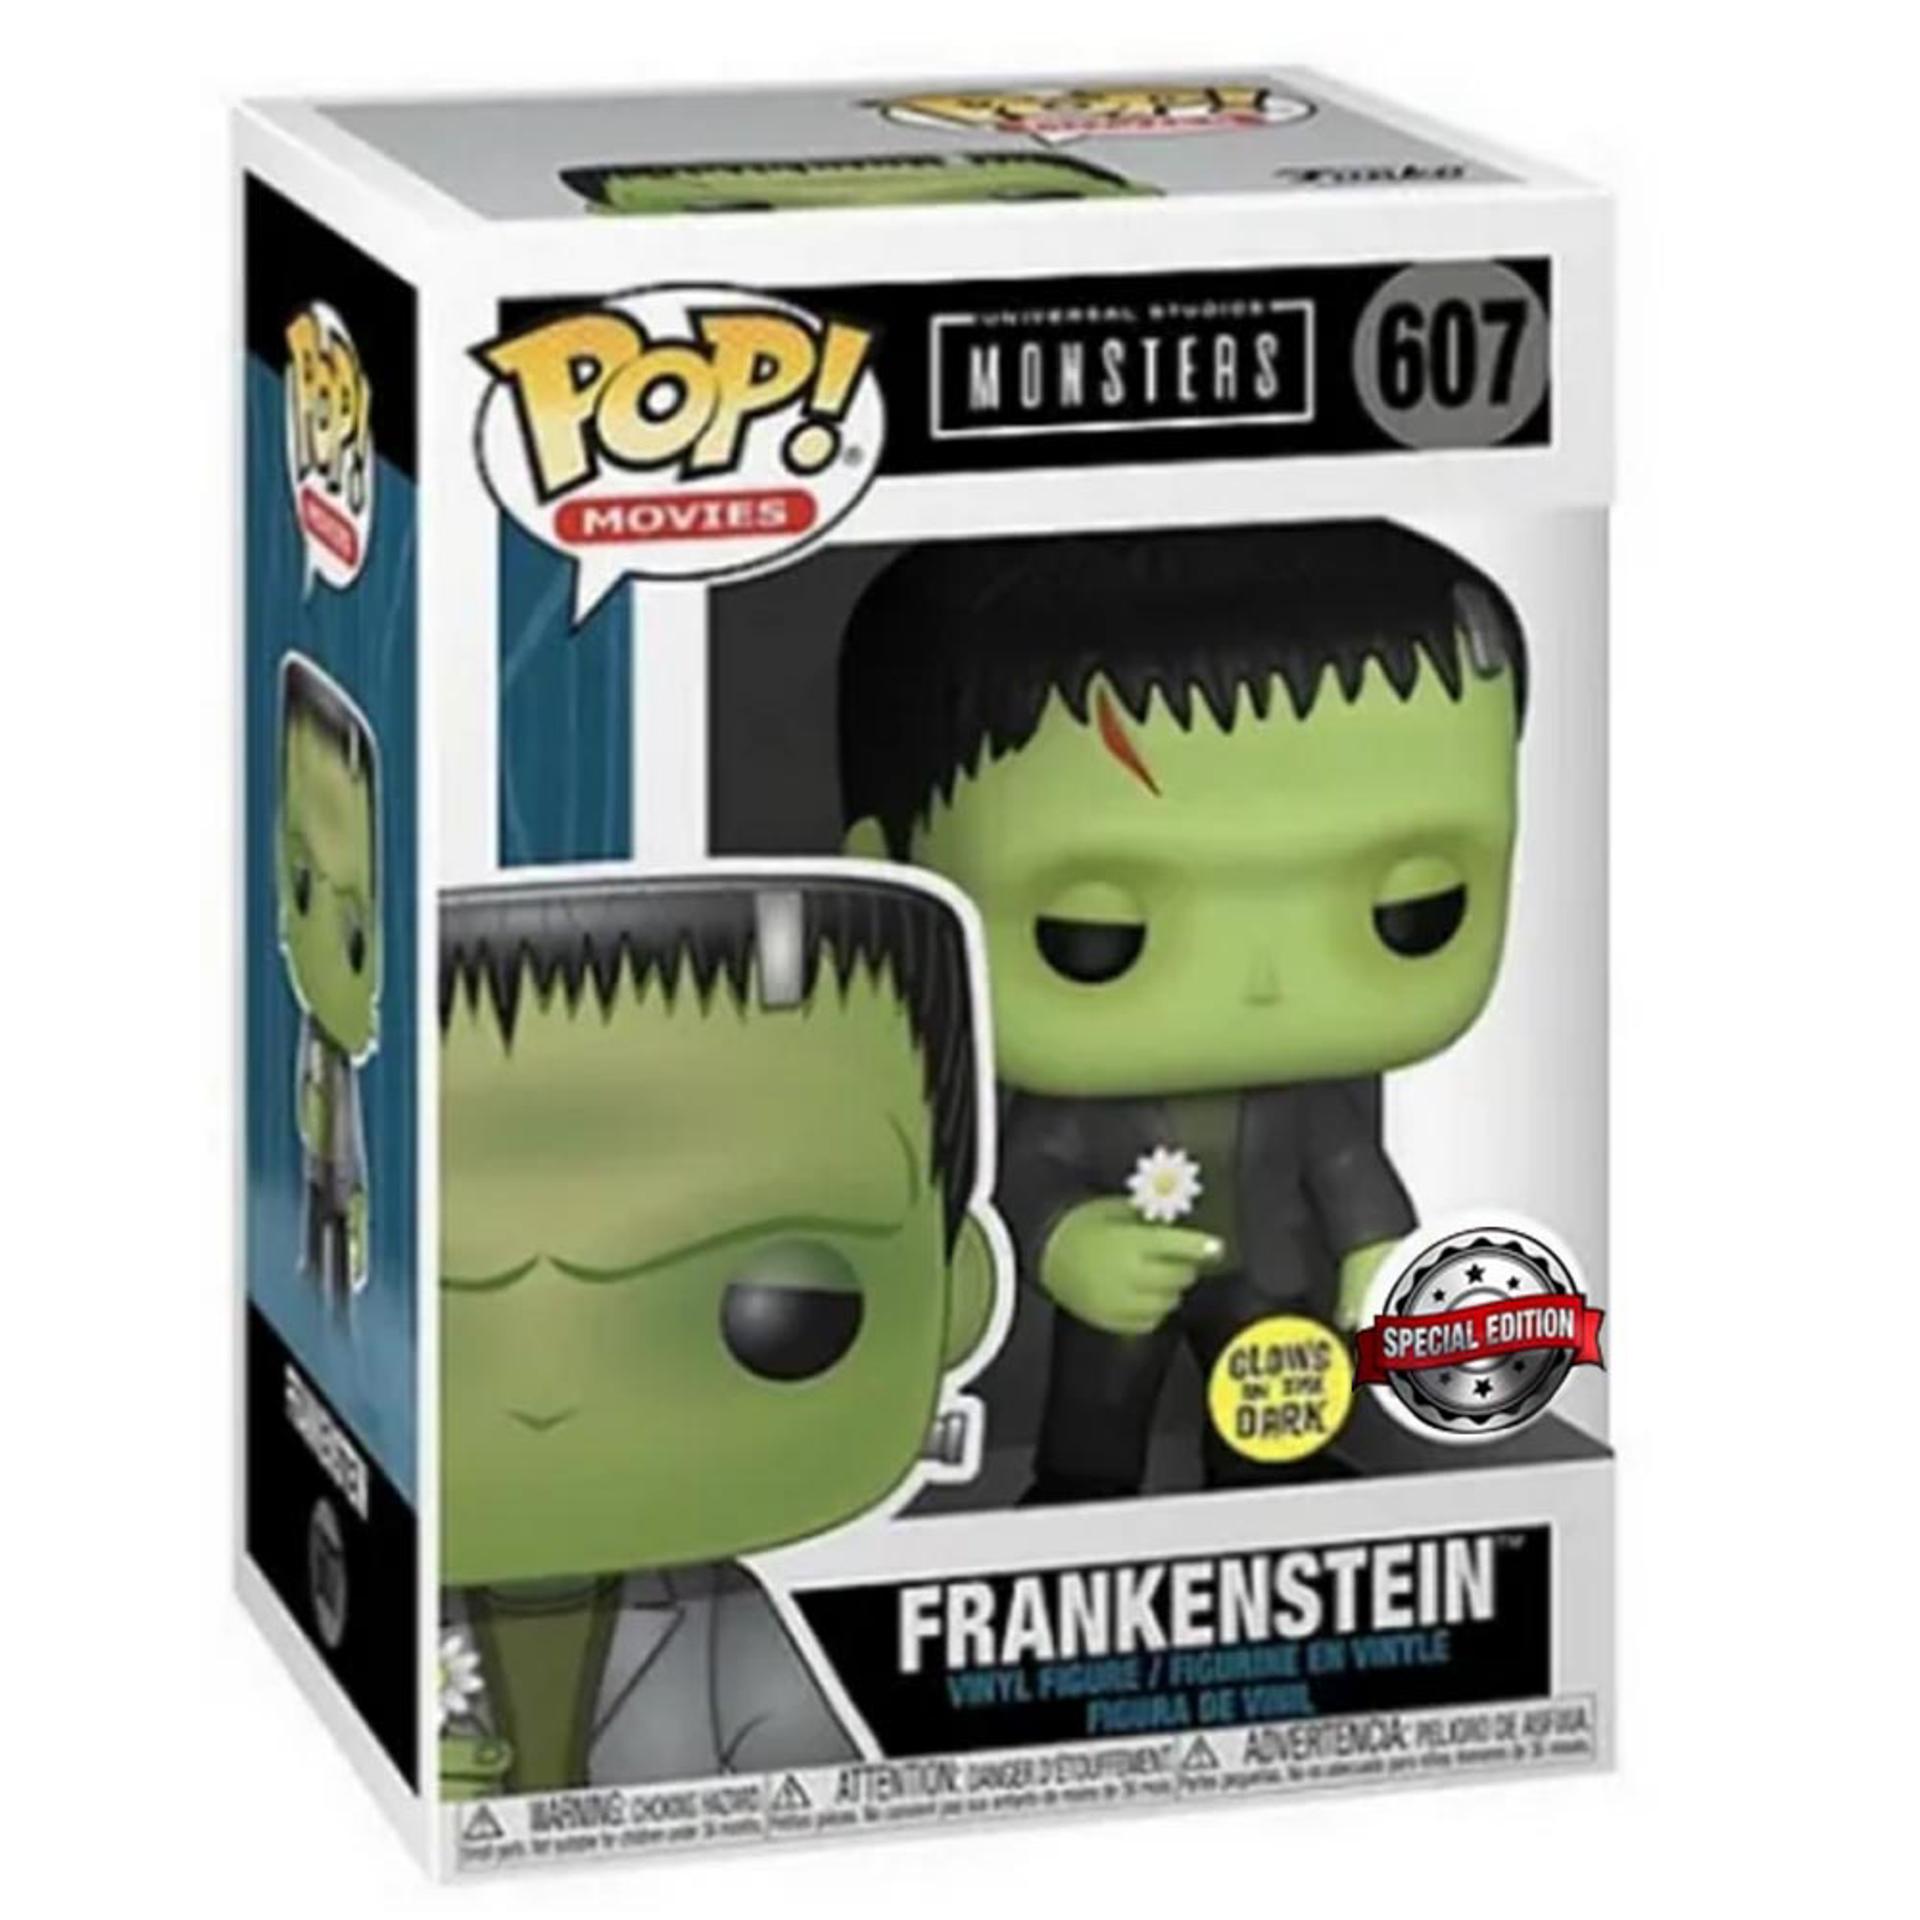 Funko Pop! Movies: Monsters - Frankenstein (with Flower - Glow-in-the-dark) - US Exclusive